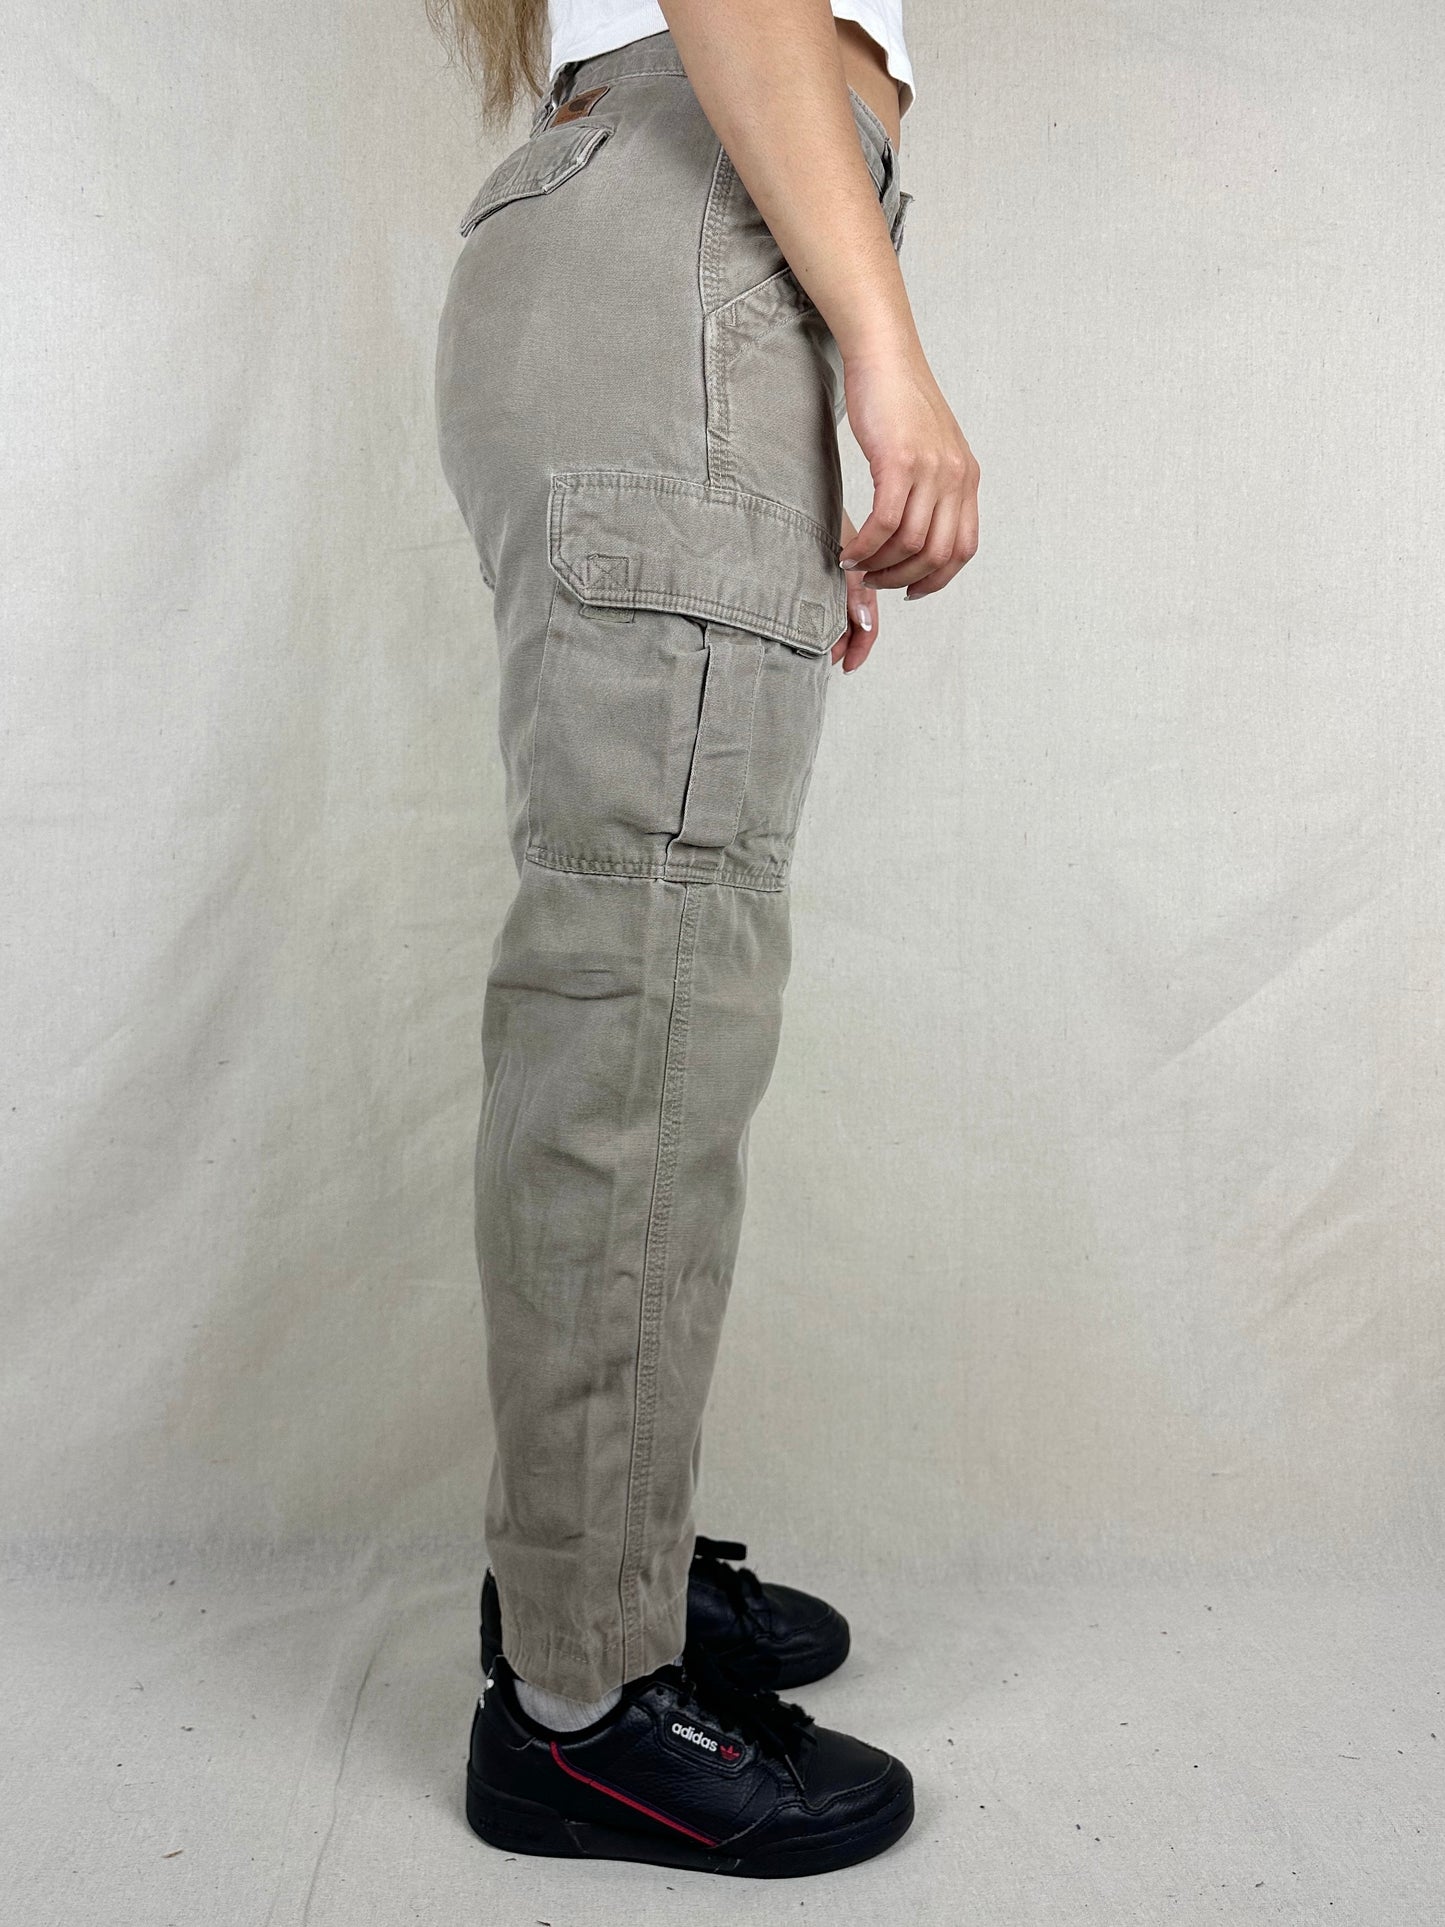 90's Carhartt Vintage Cargo Pants Size 28x26